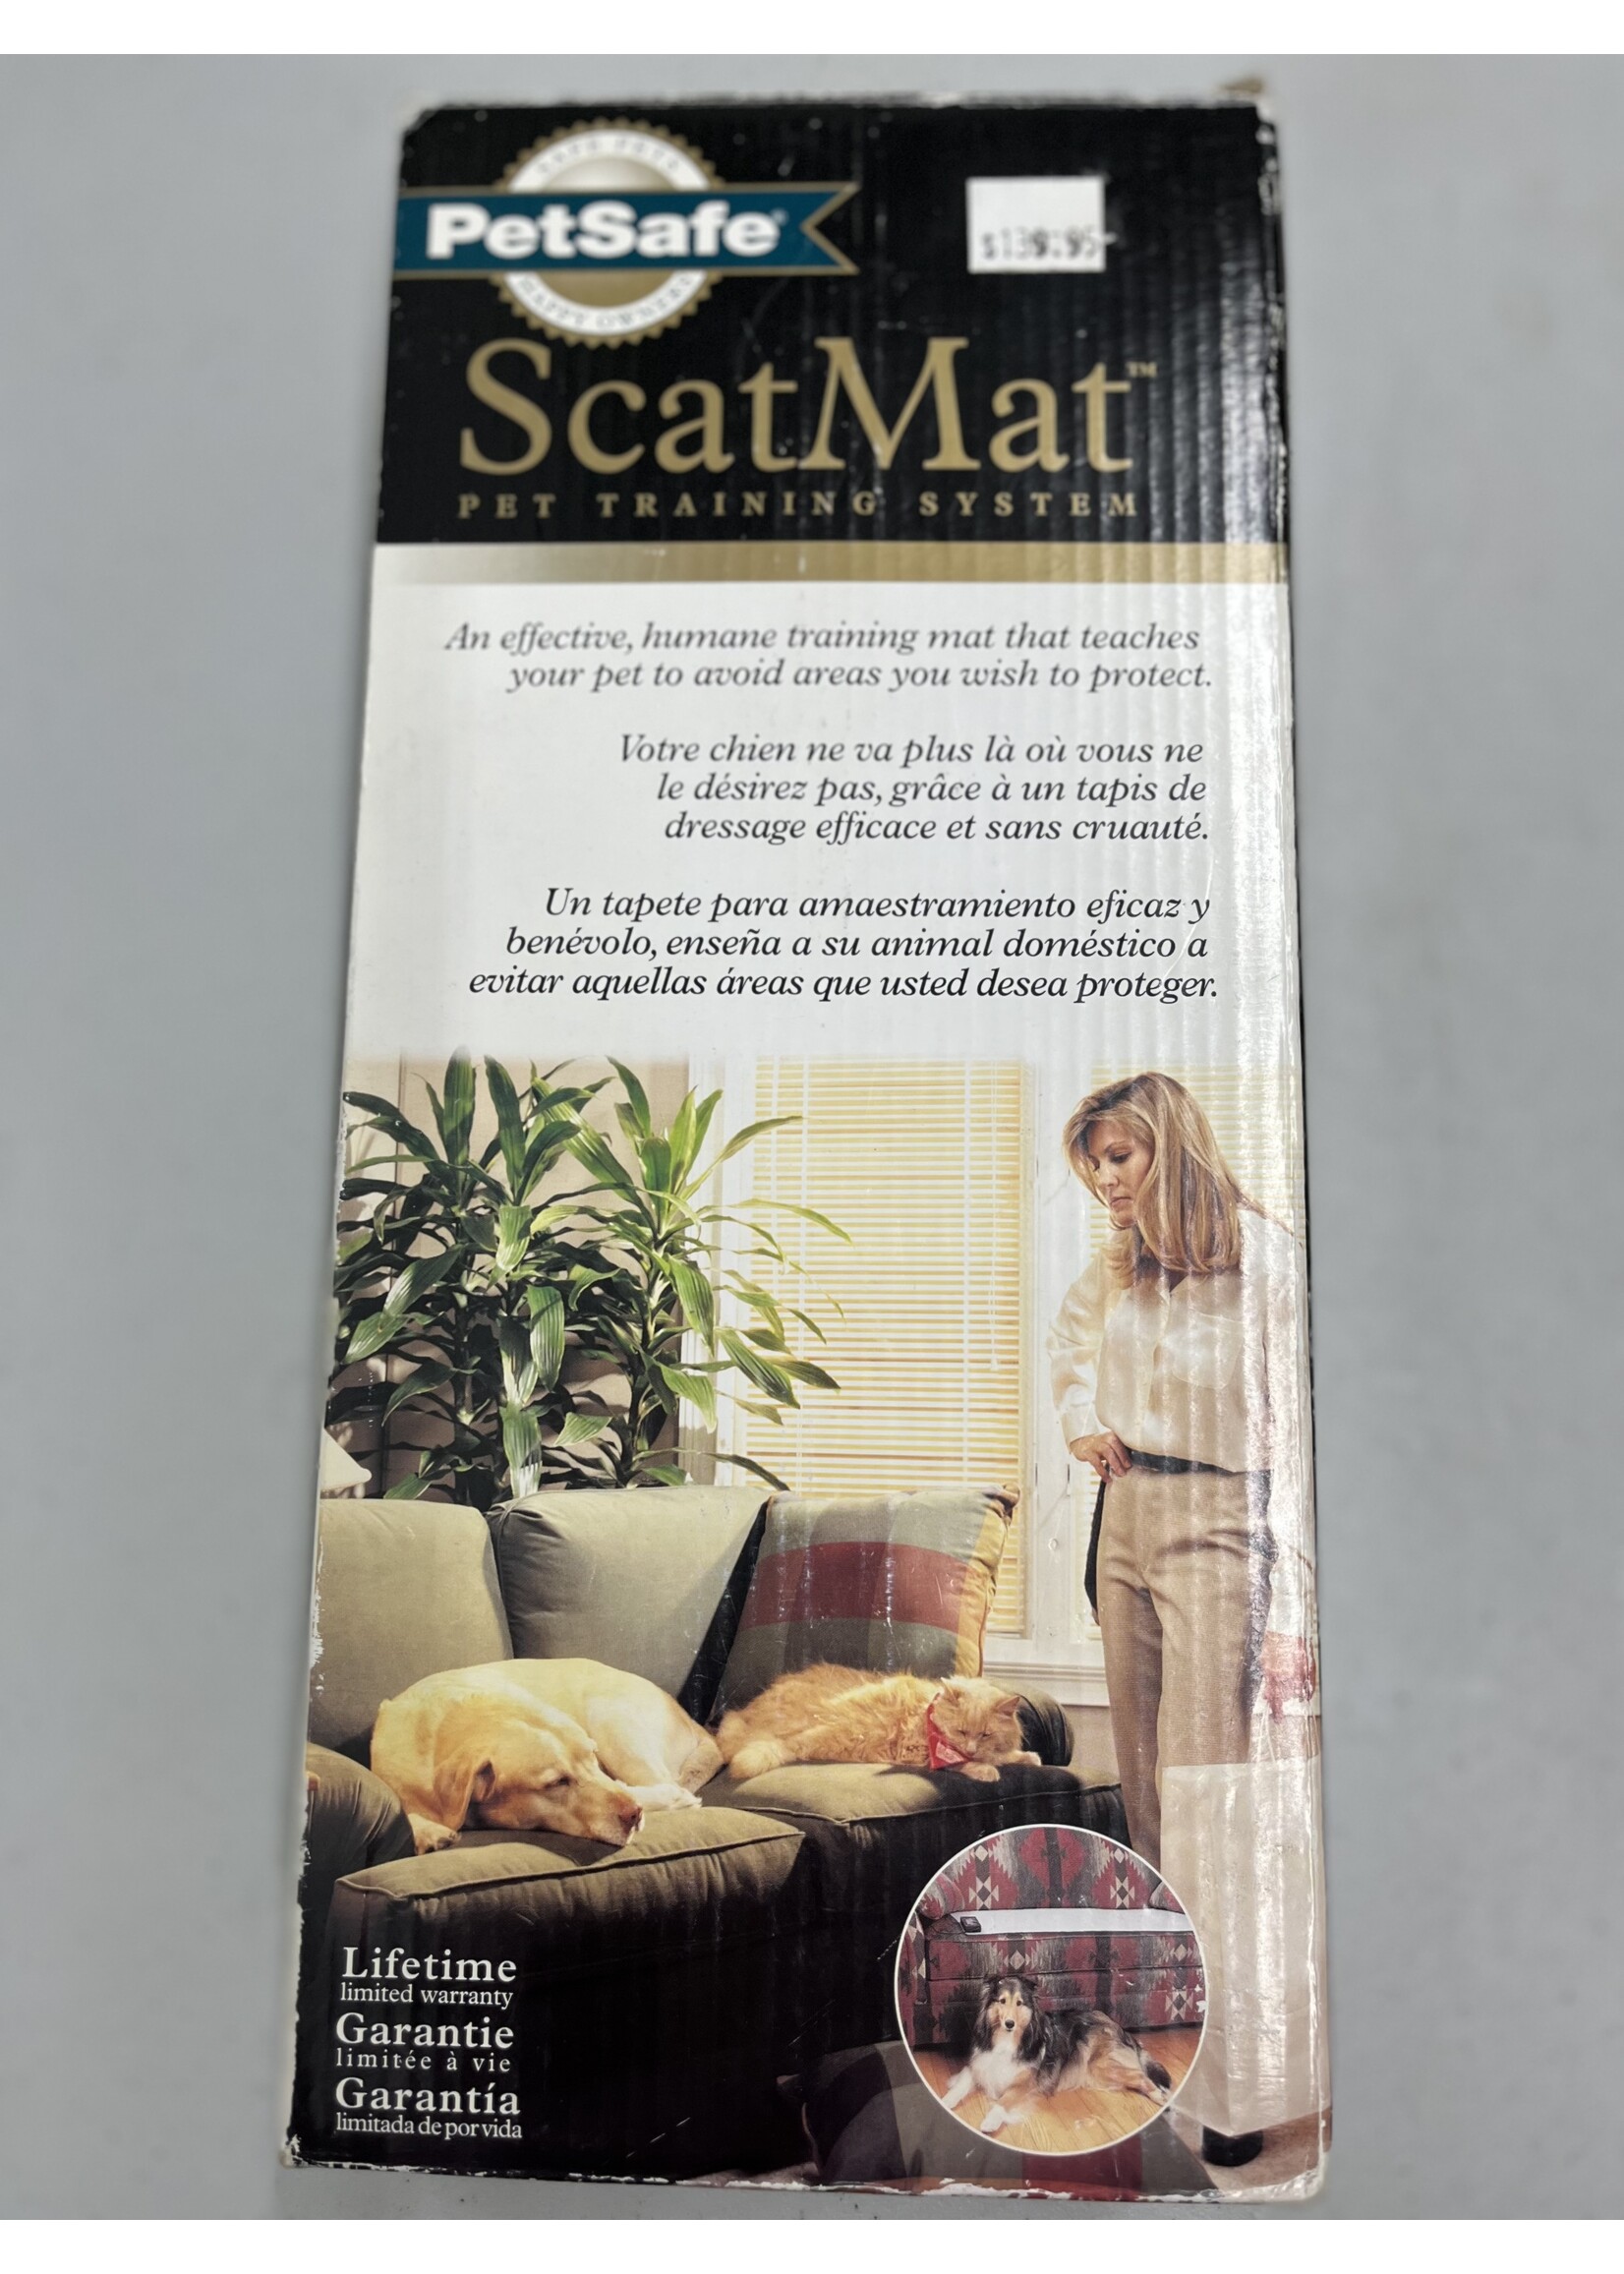 Petsafe Petsafe ScatMat Pet Training System